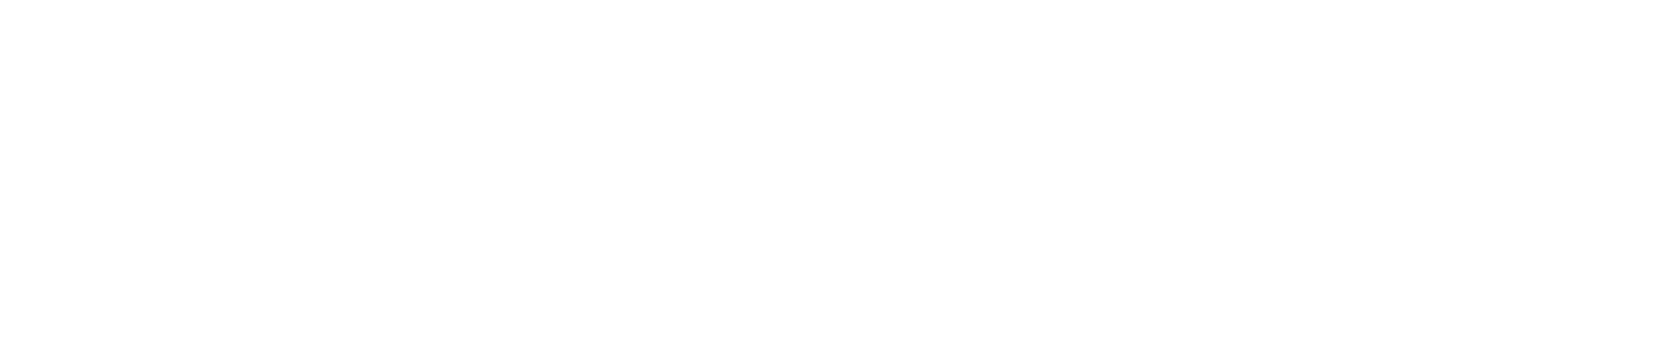 Логотип "Унистрой"